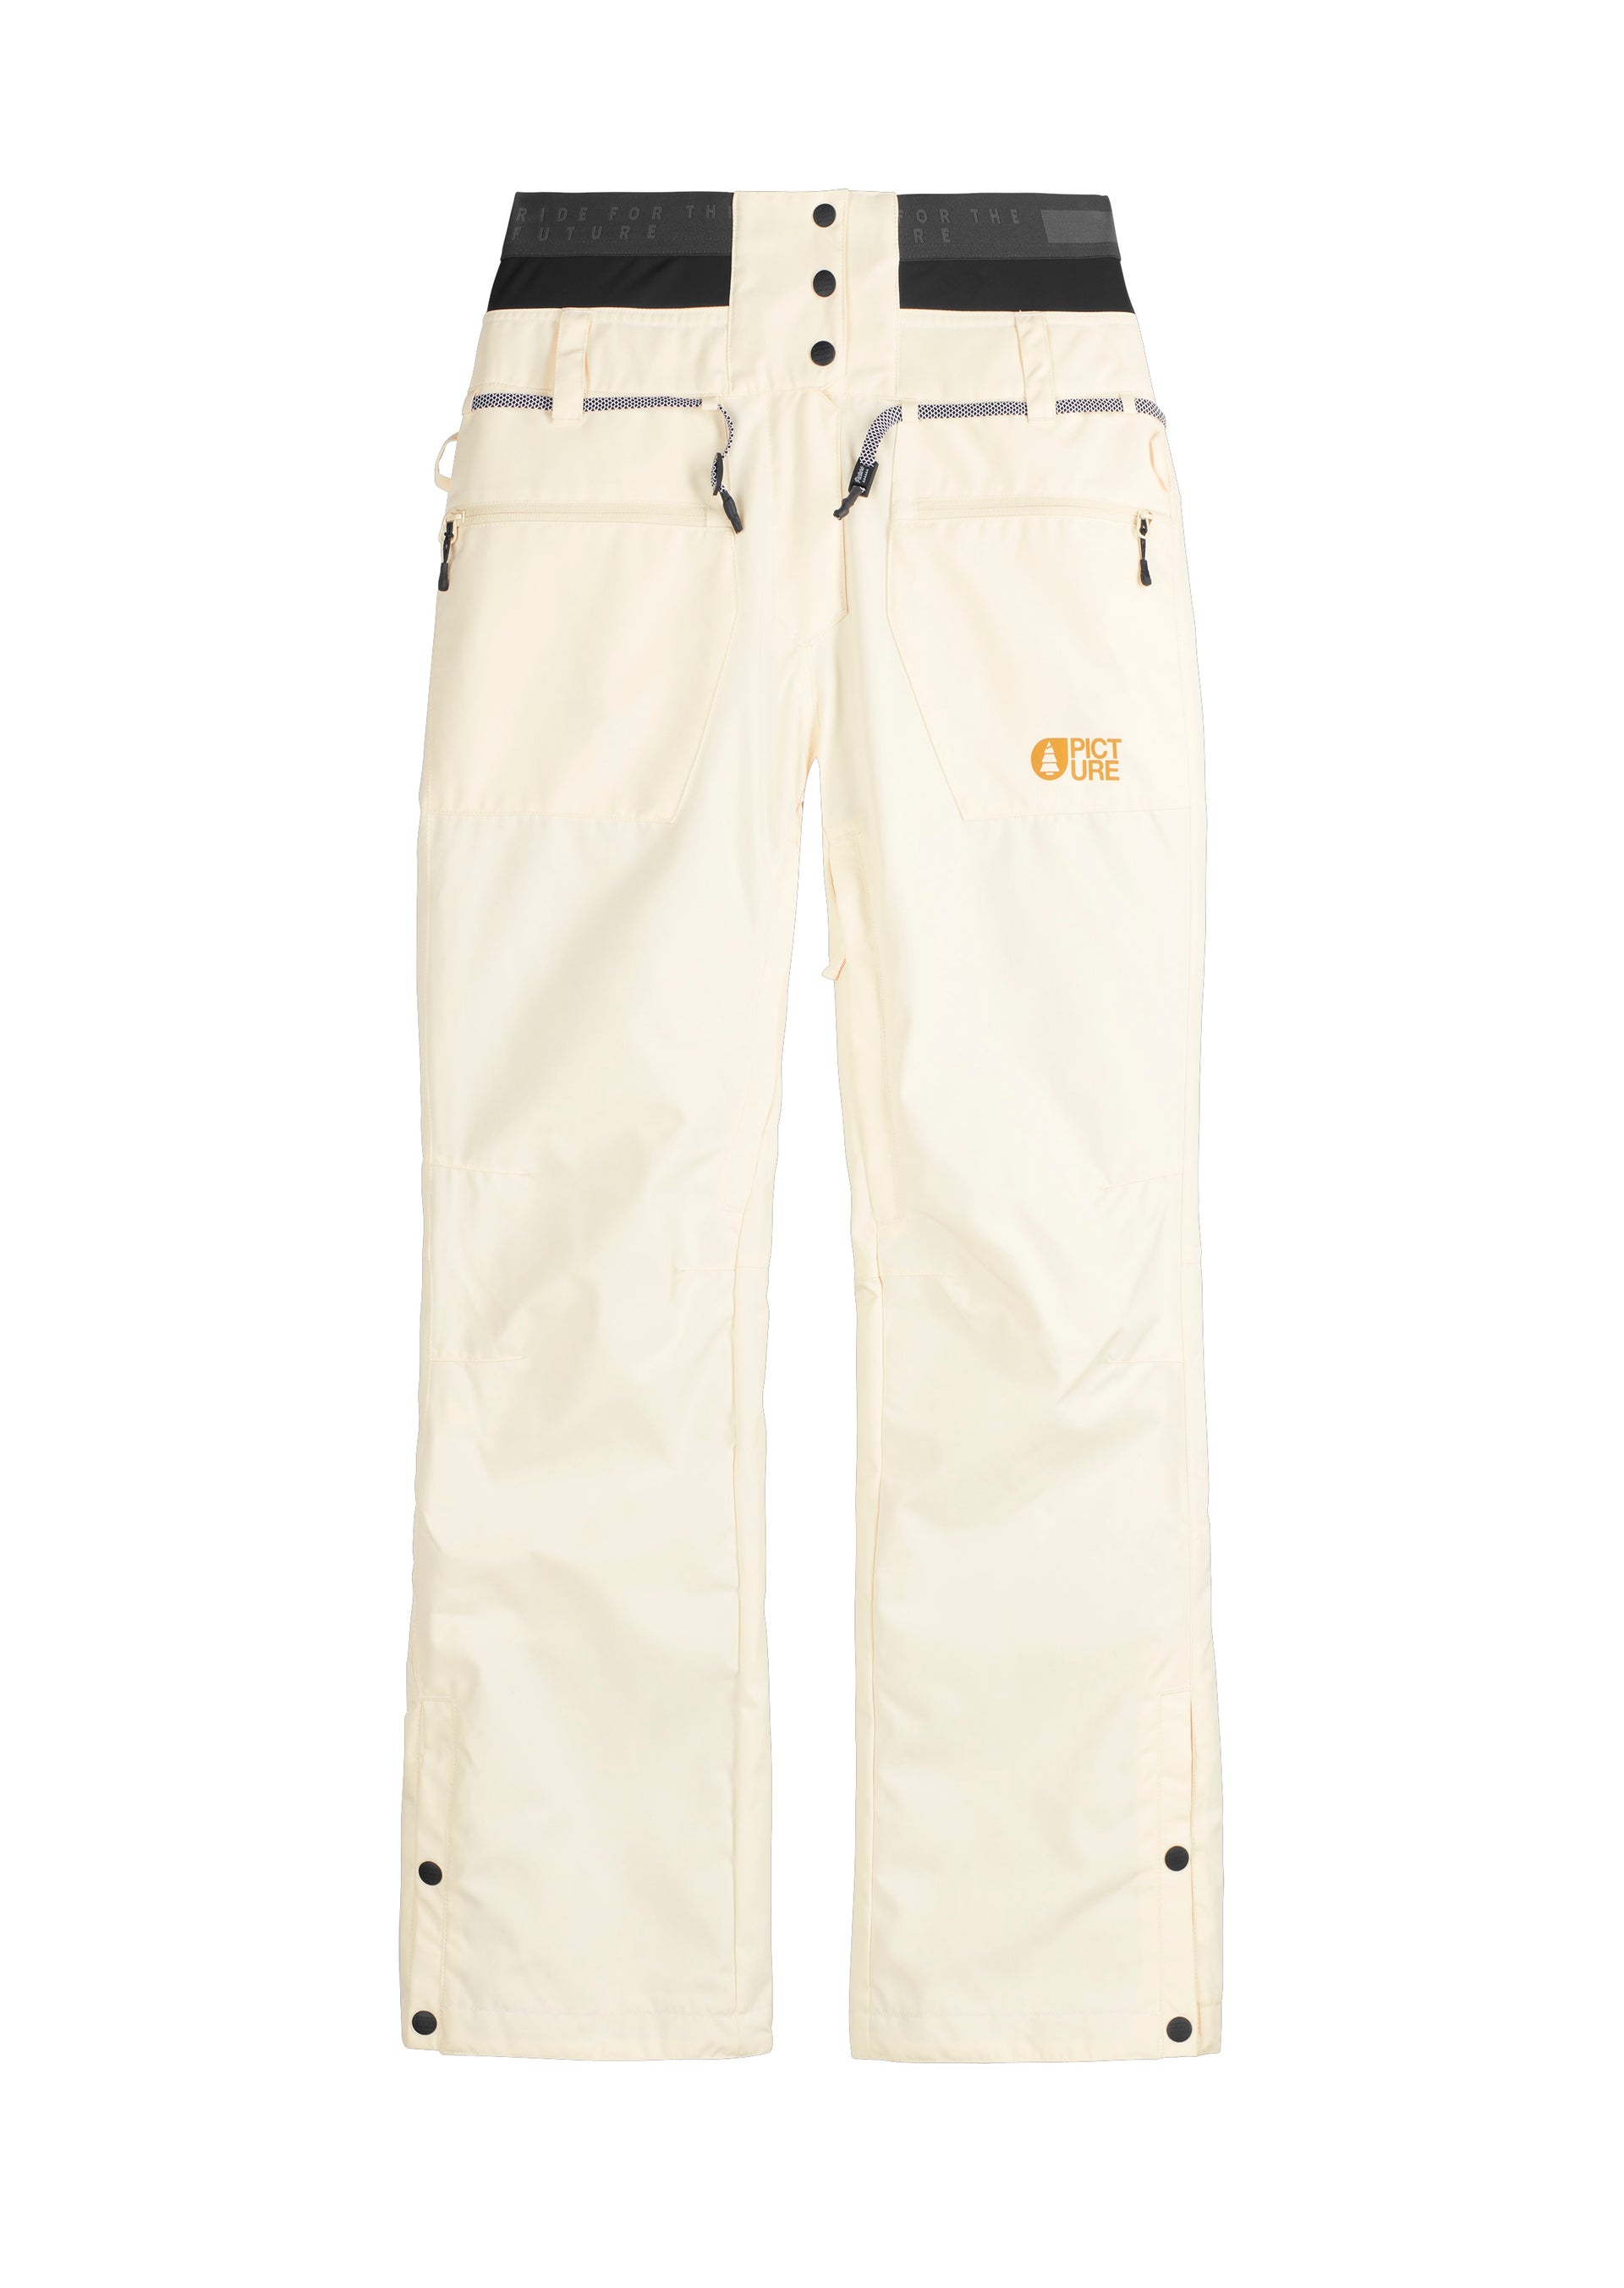 Milk White Ski Pants - Pants & Shorts for Women